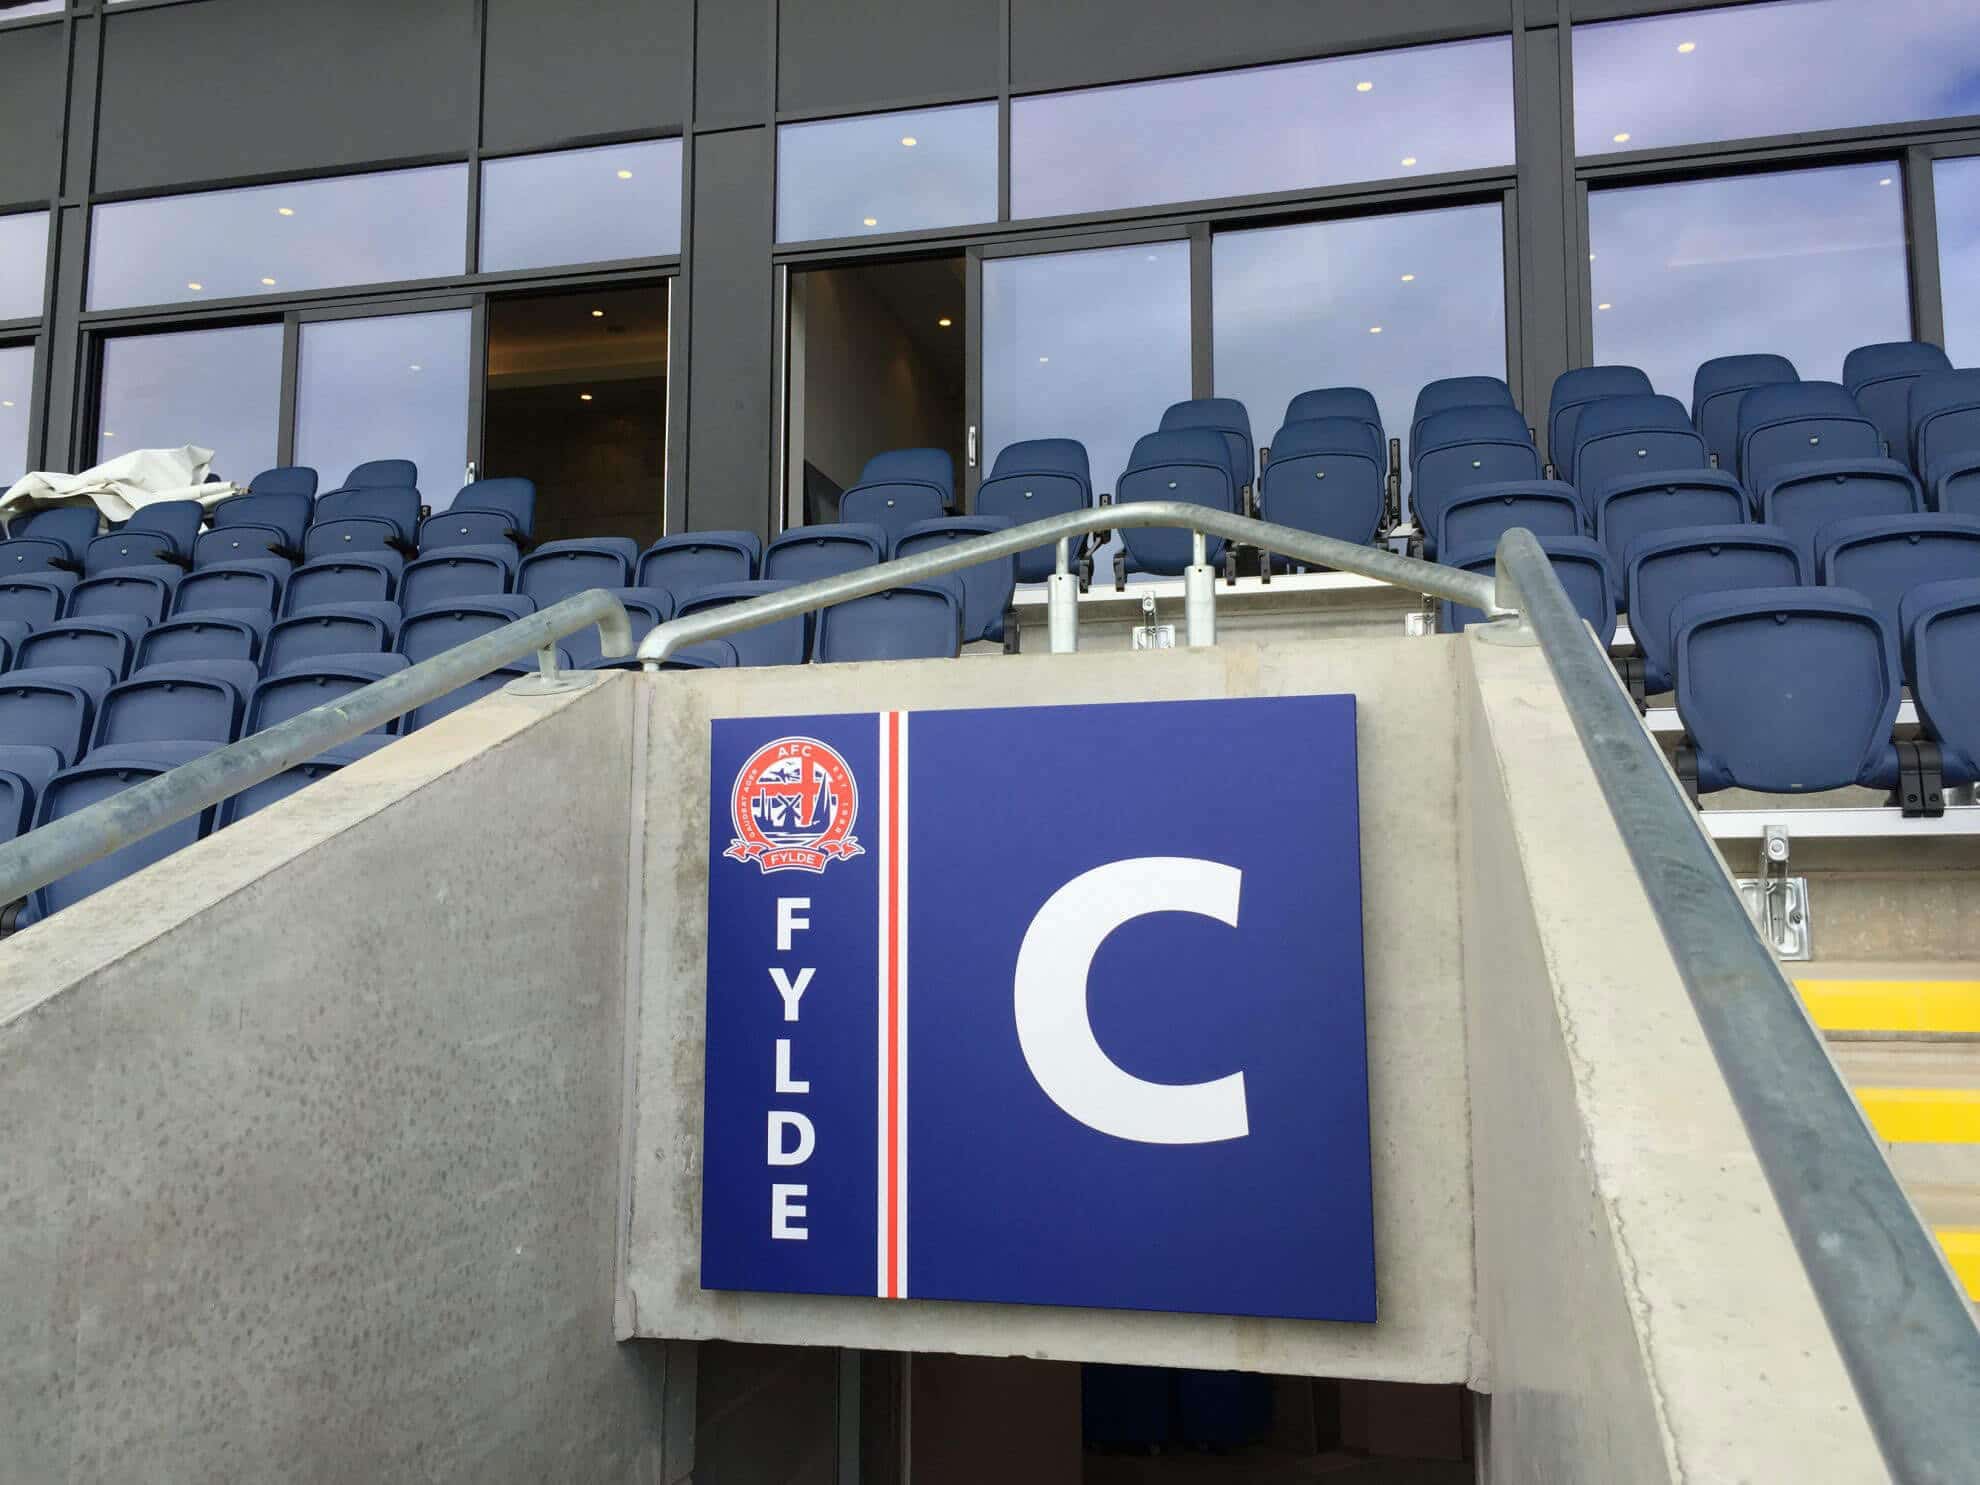 AFC Fylde seating wayfinding sign